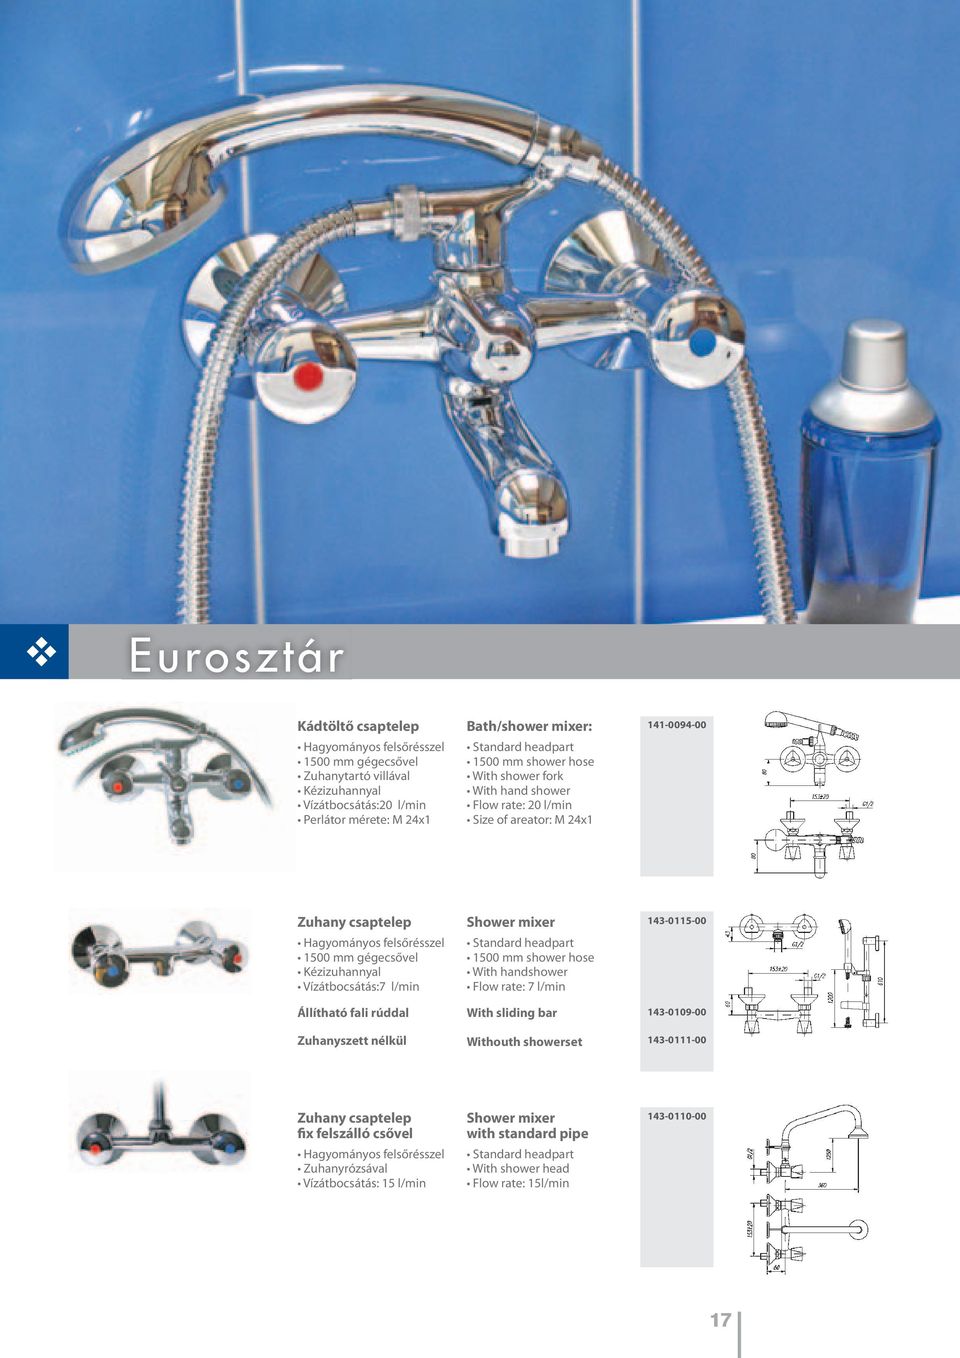 Shower mixer Standard headpart 1500 mm shower hose With handshower Flow rate: 7 l/min 143-0115-00 Állítható fali rúddal With sliding bar 143-0109-00 Zuhanyszett nélkül Withouth showerset 143-0111-00